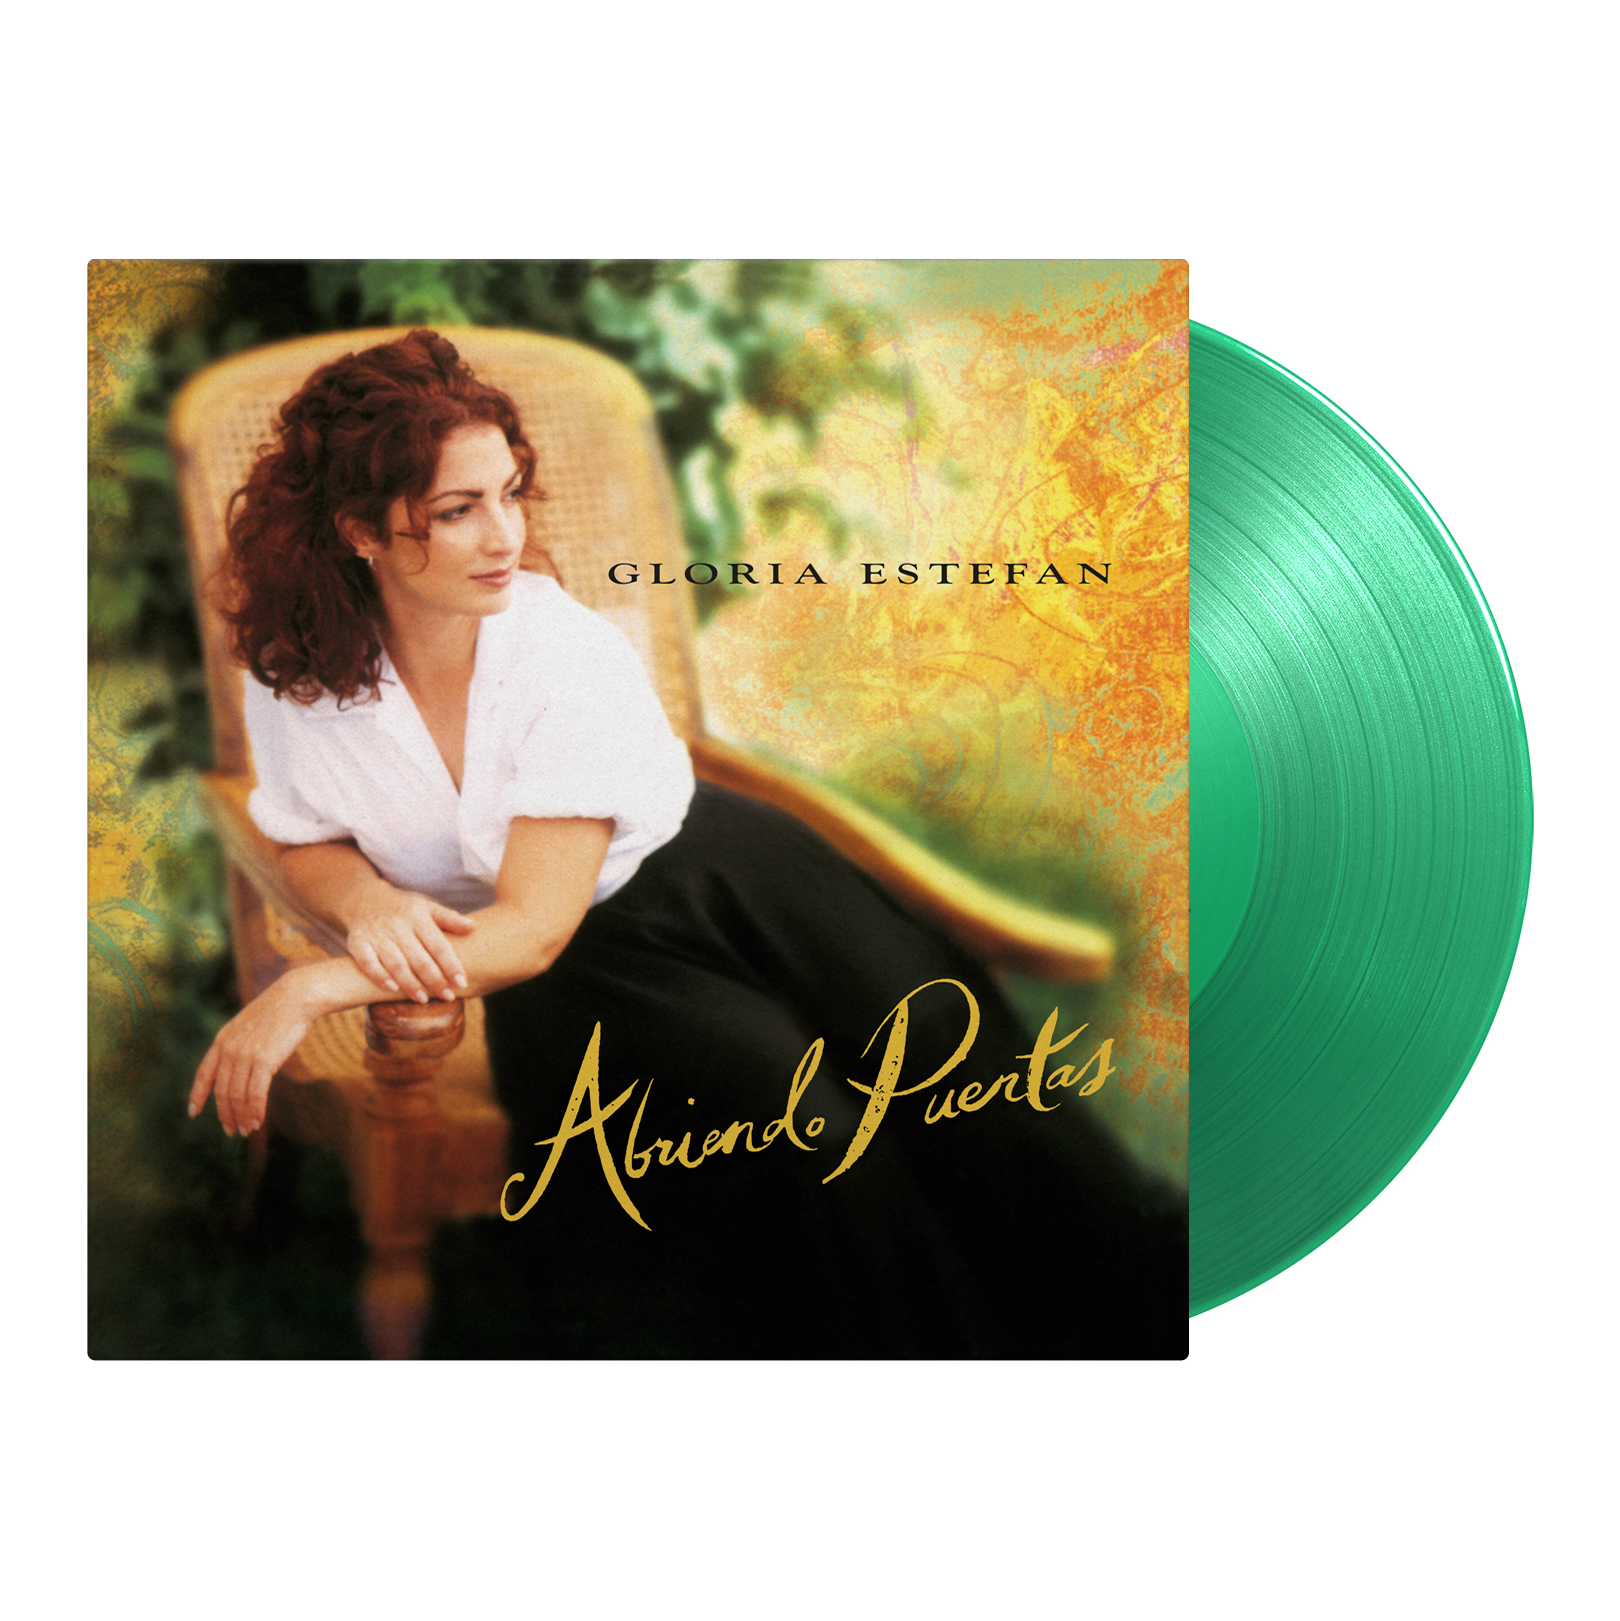 Gloria Estefan - Abriendo Puertas: Limited Translucent Green Vinyl LP